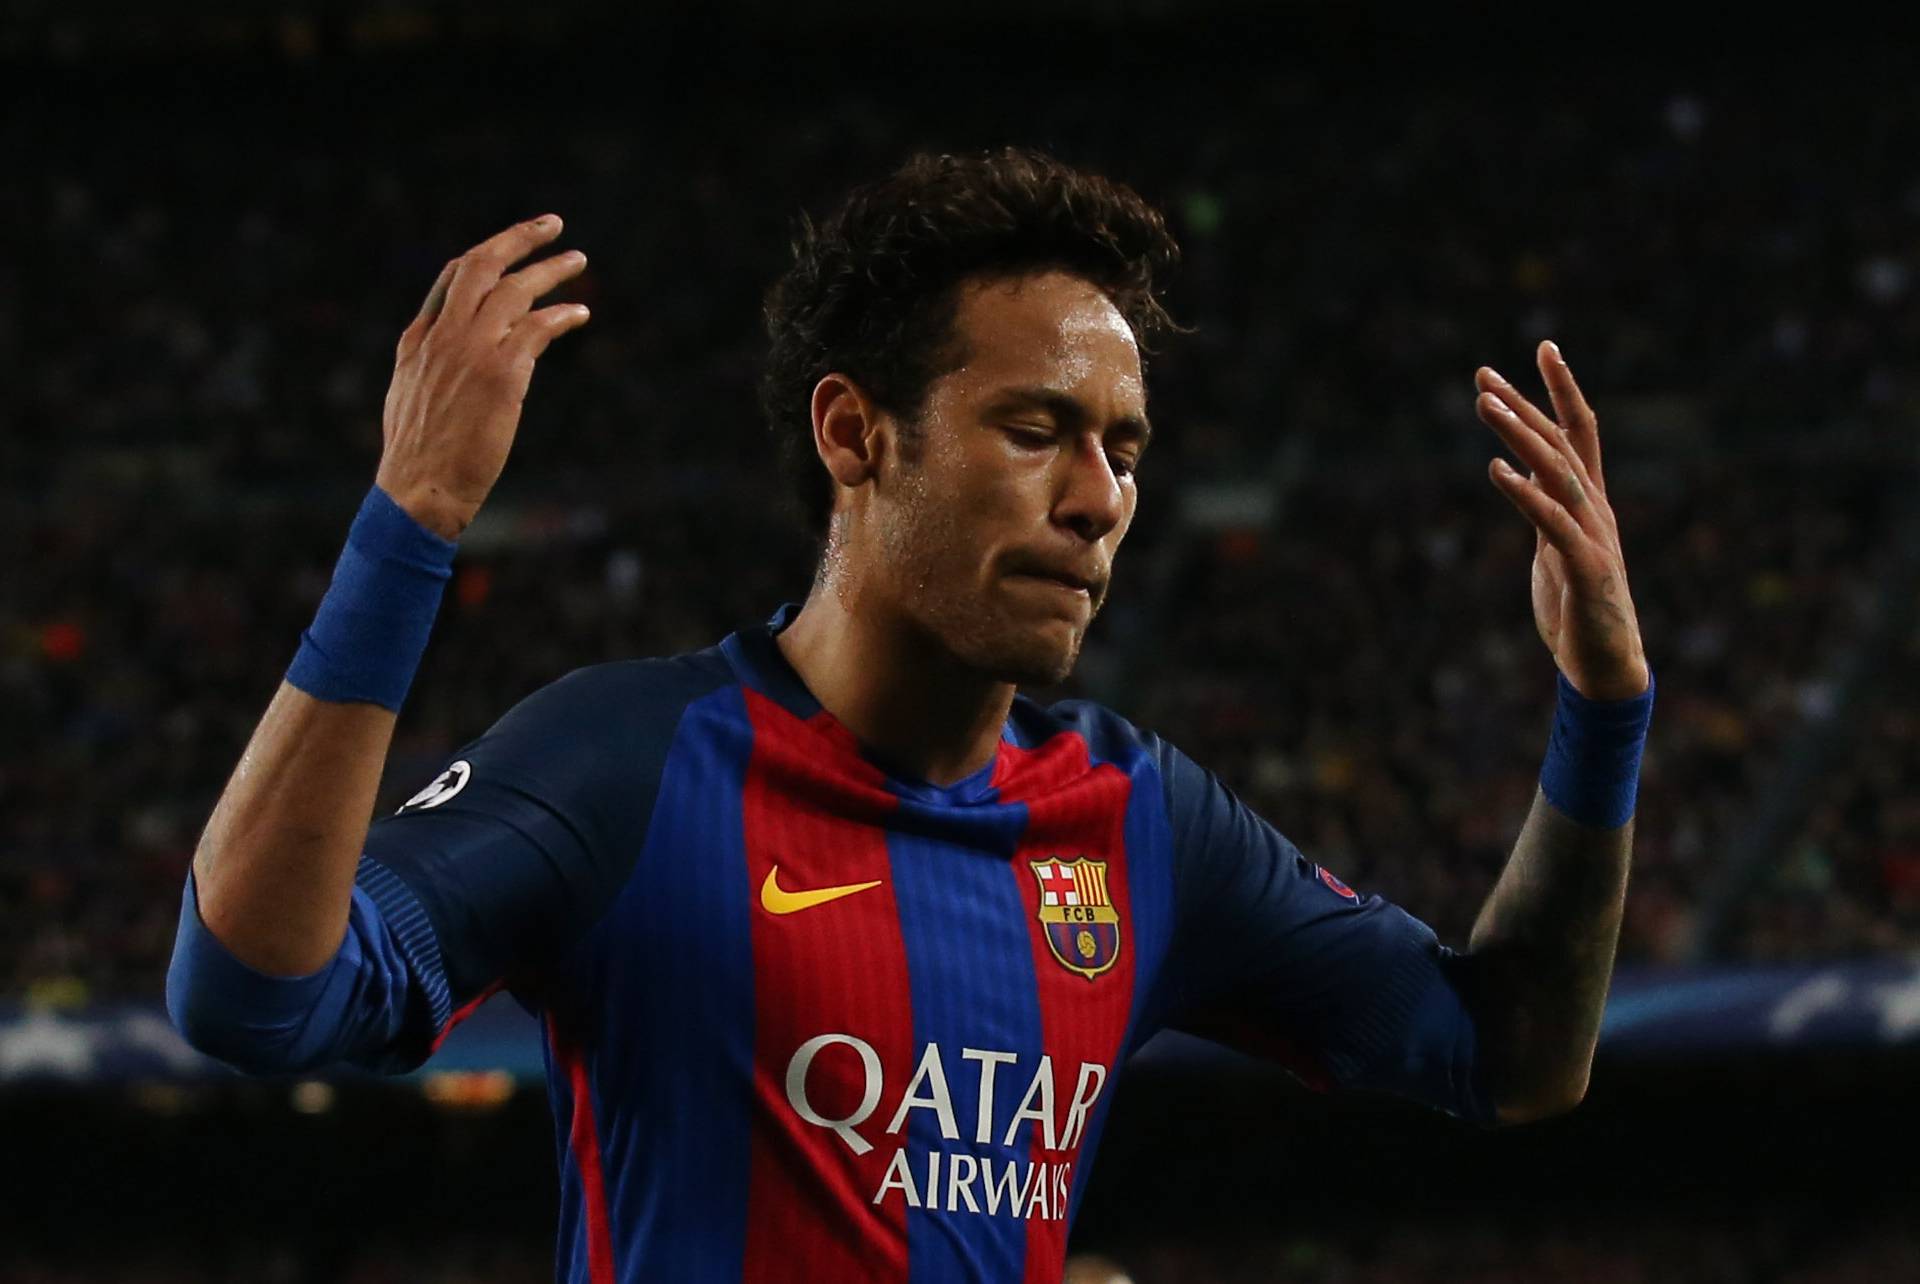 Barcelona's Neymar reacts